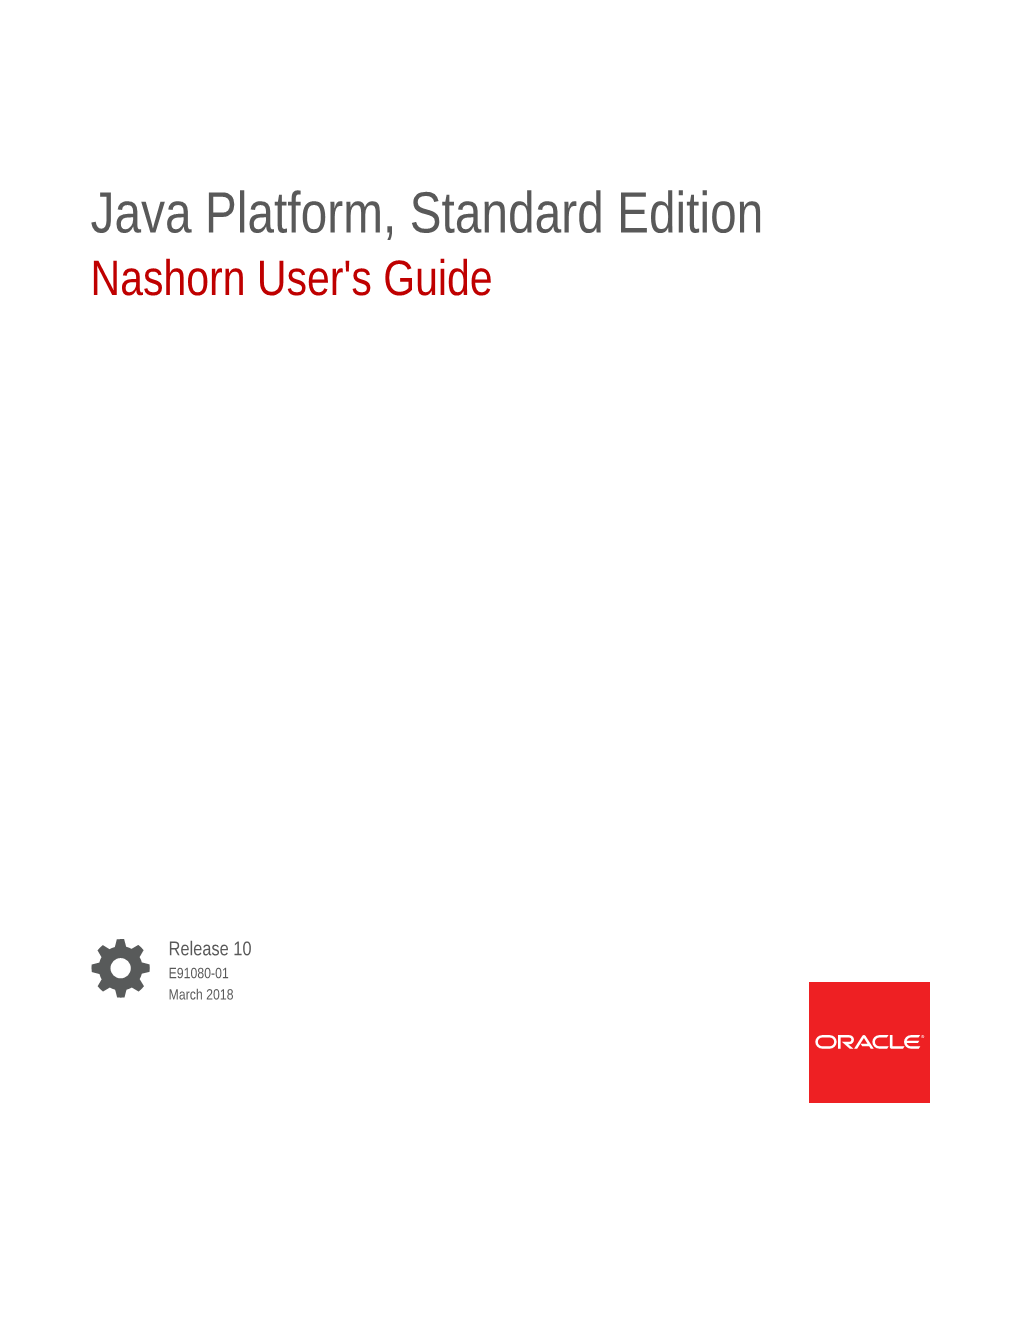 Java Platform, Standard Edition Nashorn User's Guide